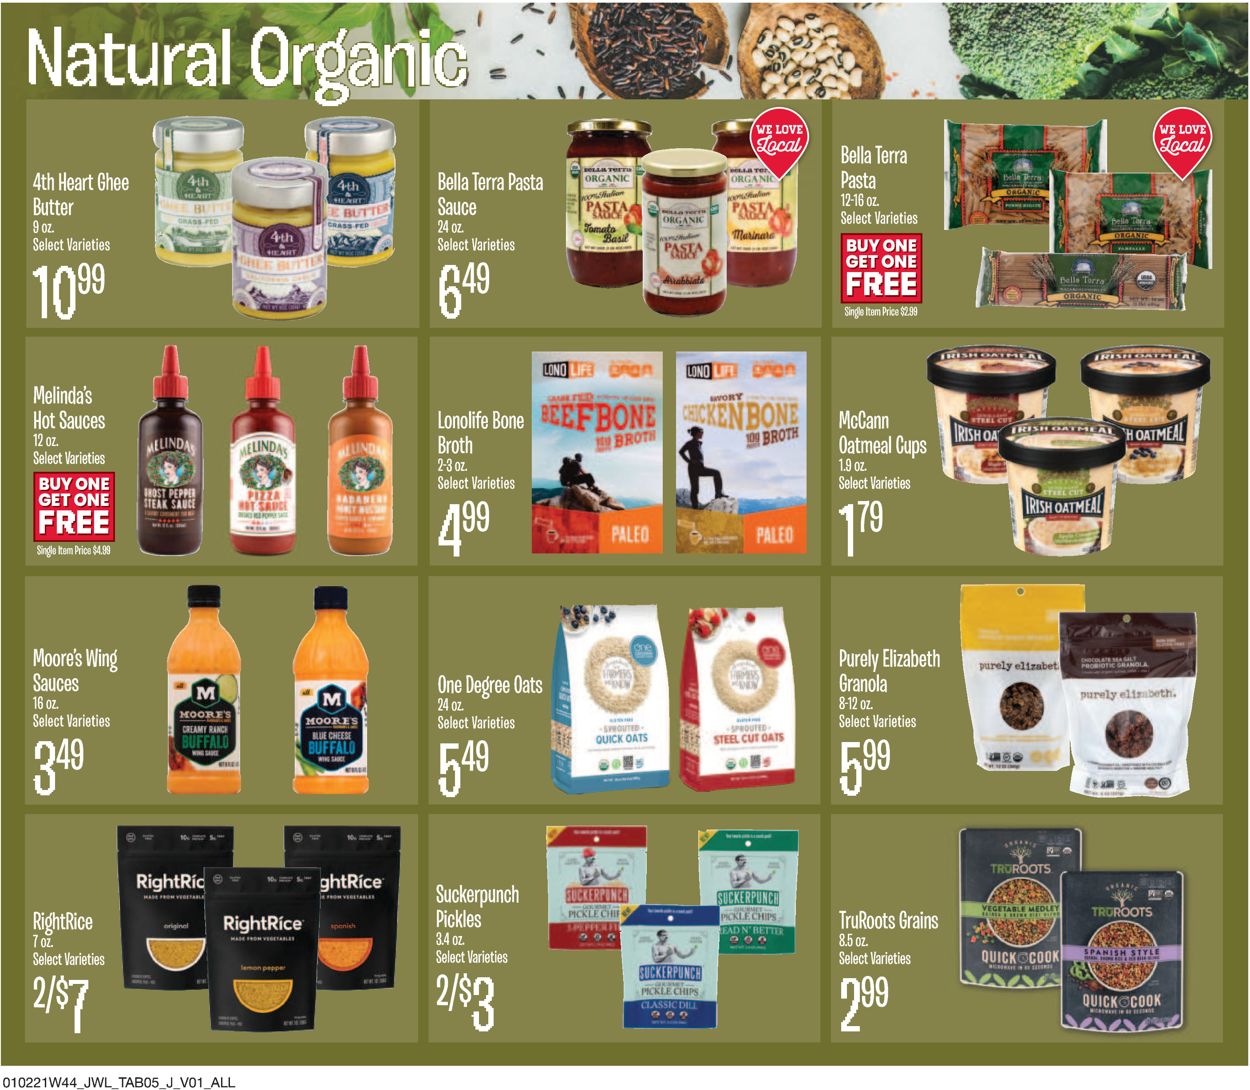 Catalogue Jewel Osco Natural & Organic 2021 from 01/02/2021